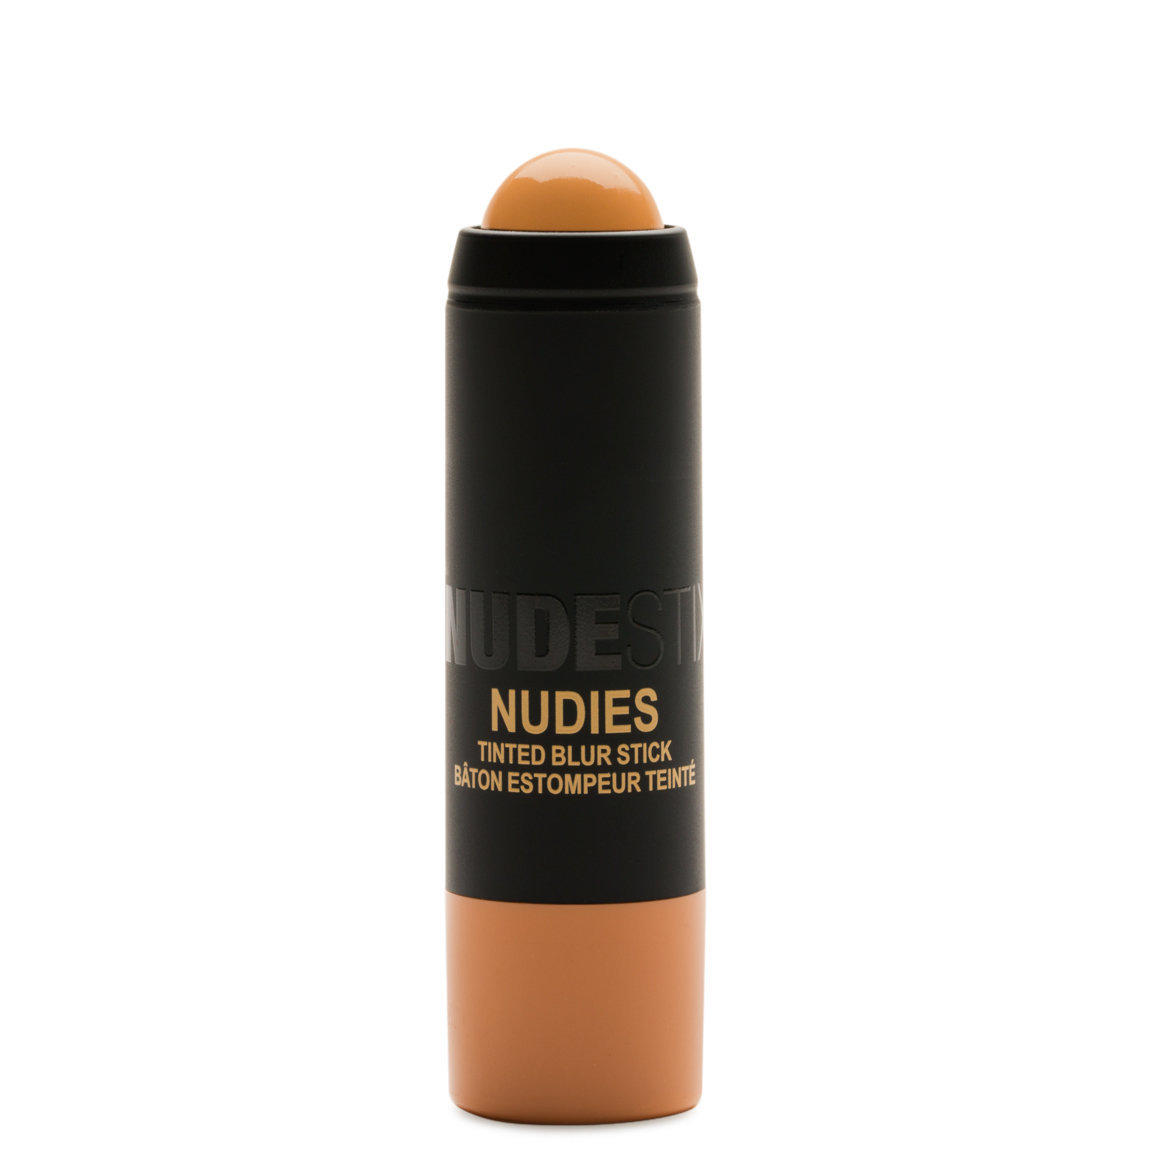 NudeStix Nudies Tinted Blur Stick Light 3